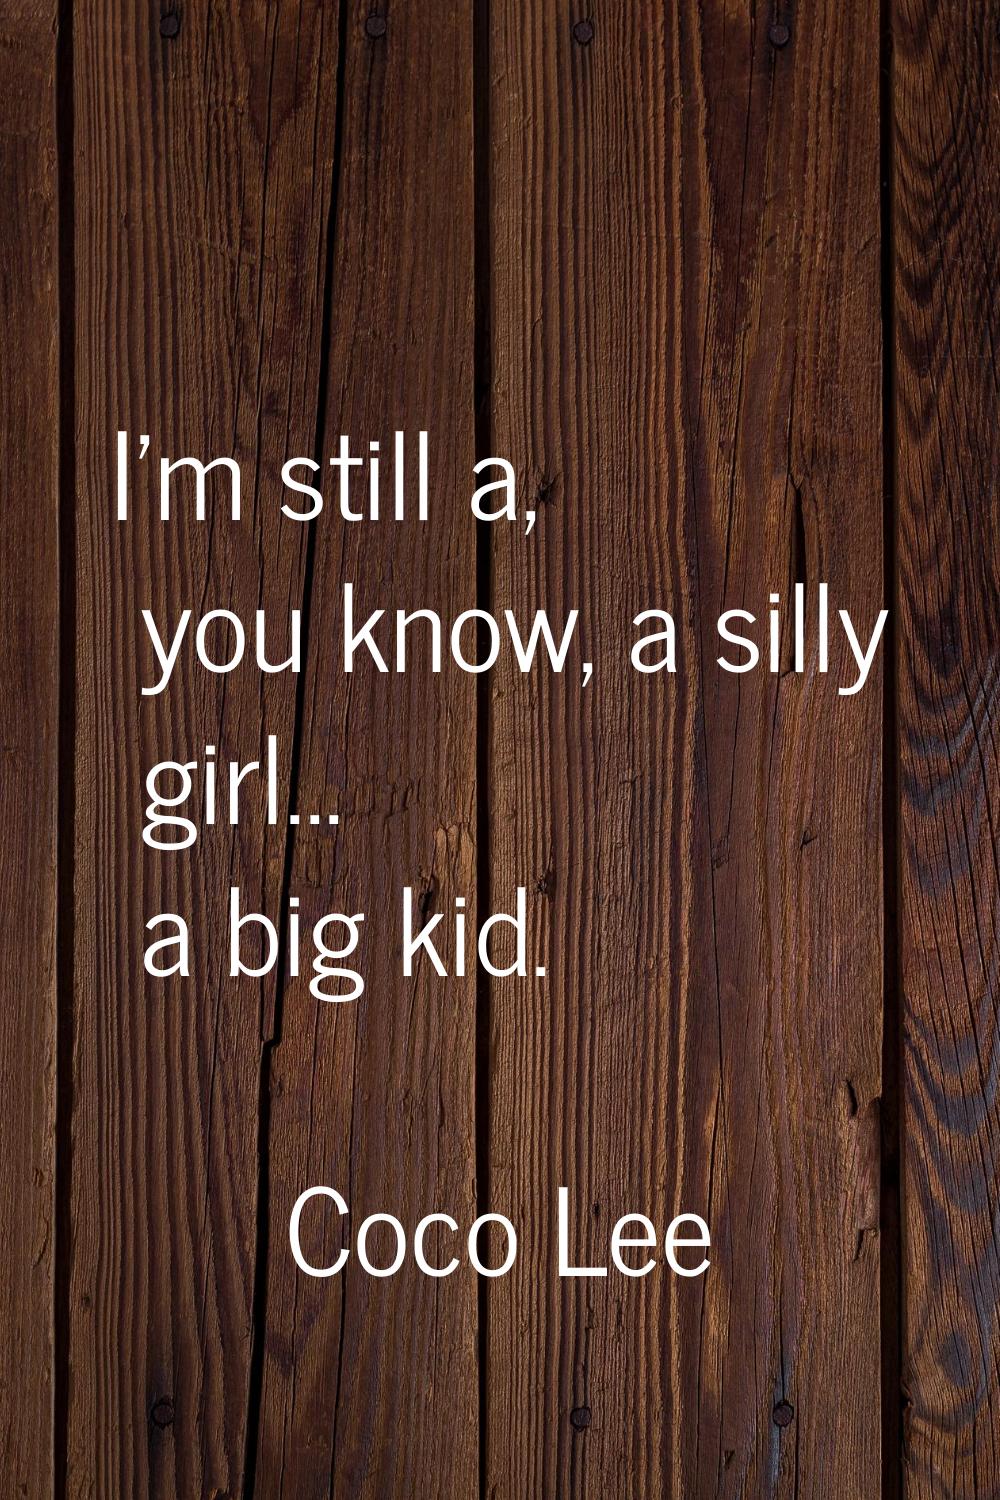 I'm still a, you know, a silly girl... a big kid.